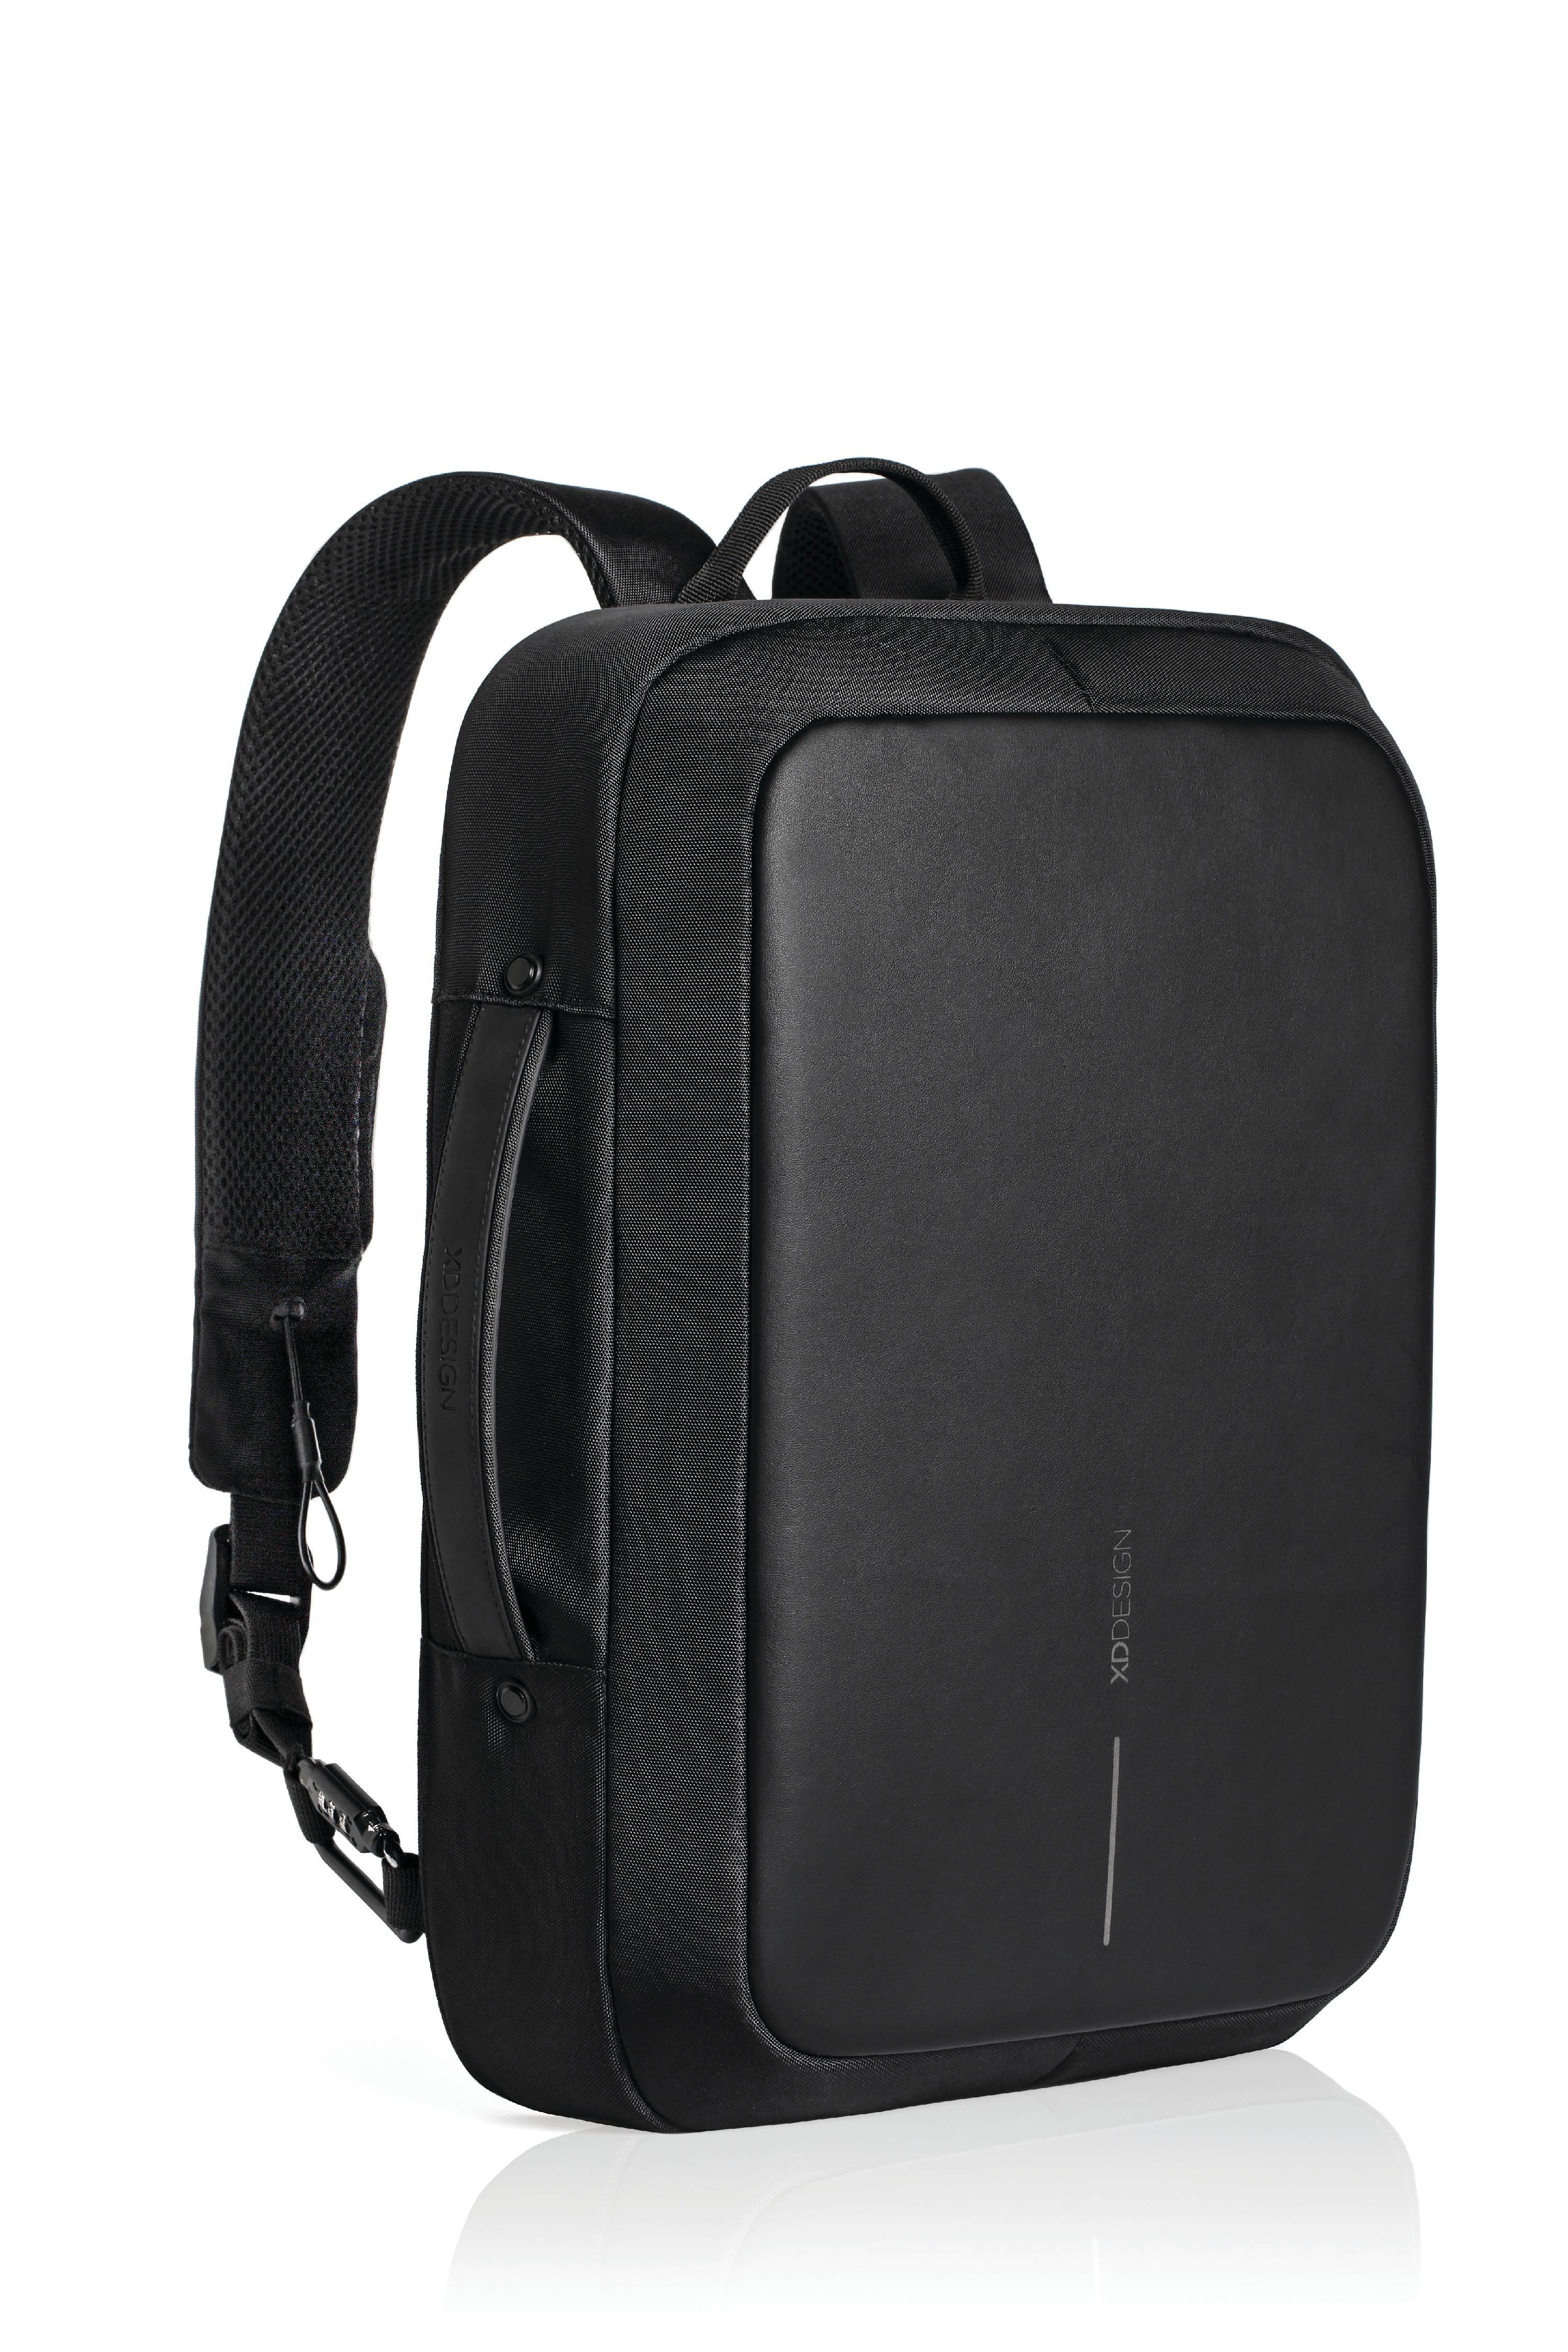 XD Design - XD Design Bobby Bizz Anti-Theft Laptop Backpack & Briefcase ...